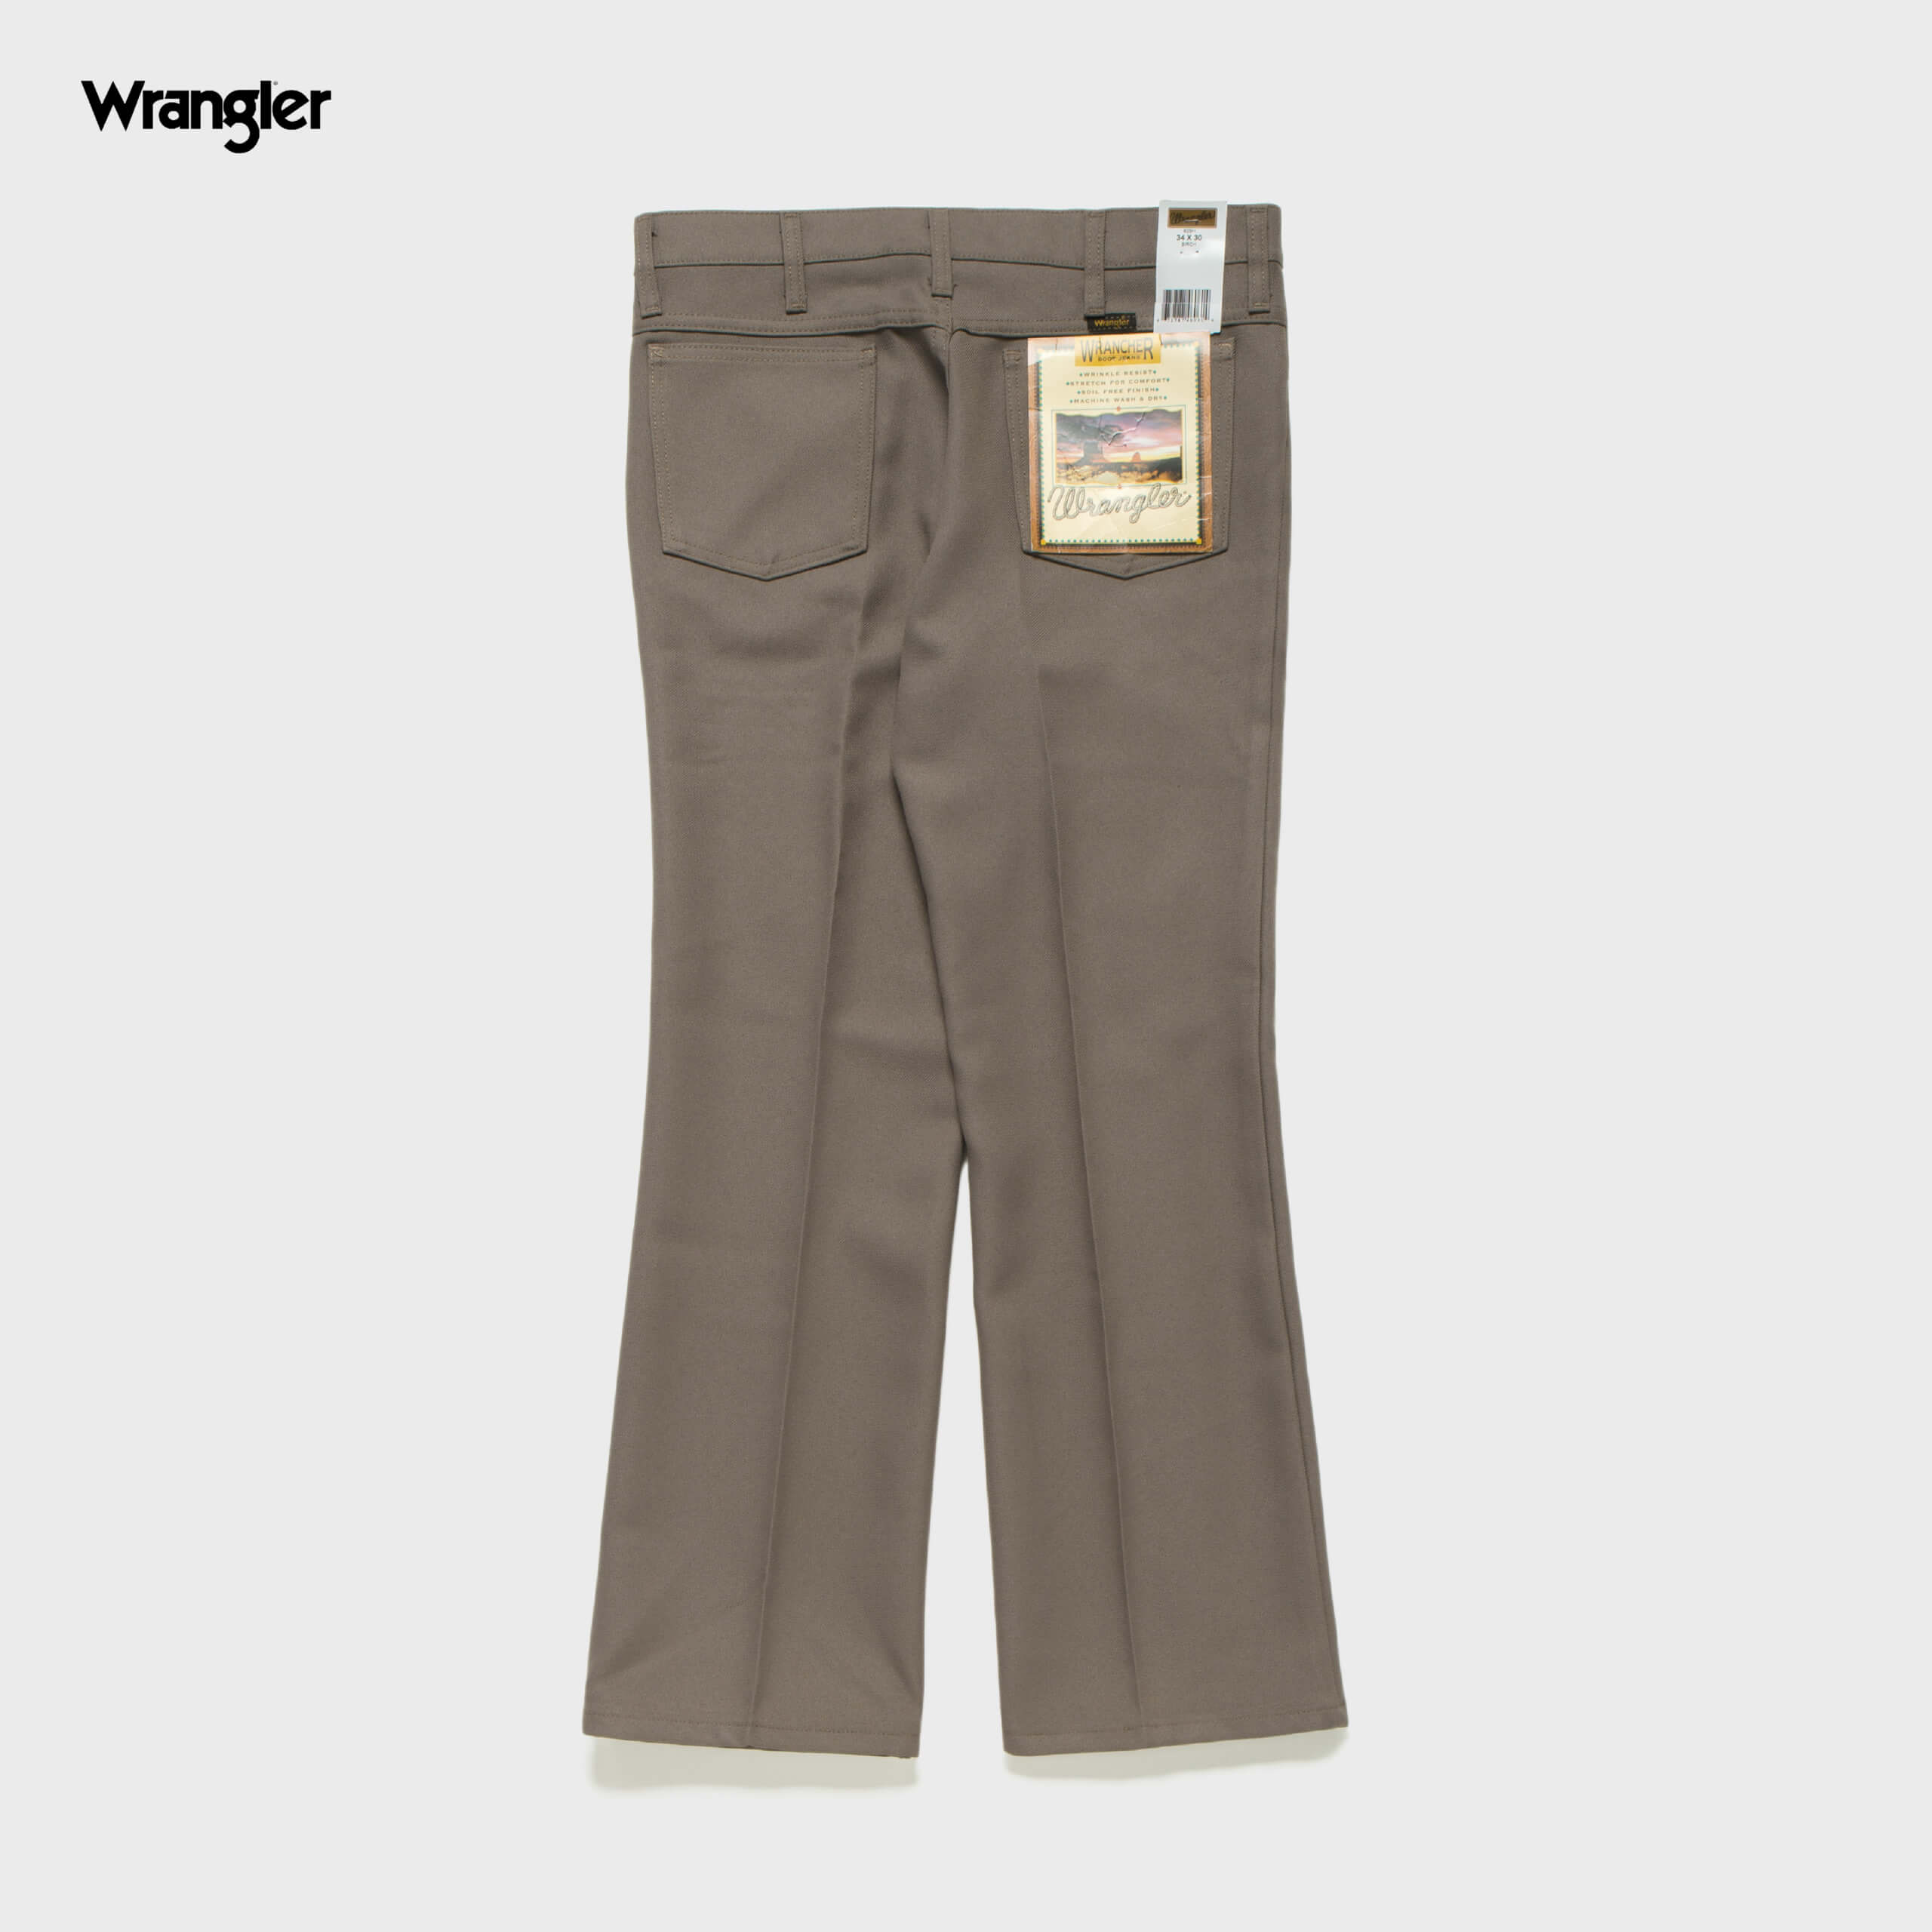 wrangler-wrancher-dress-jeans-brich_p1